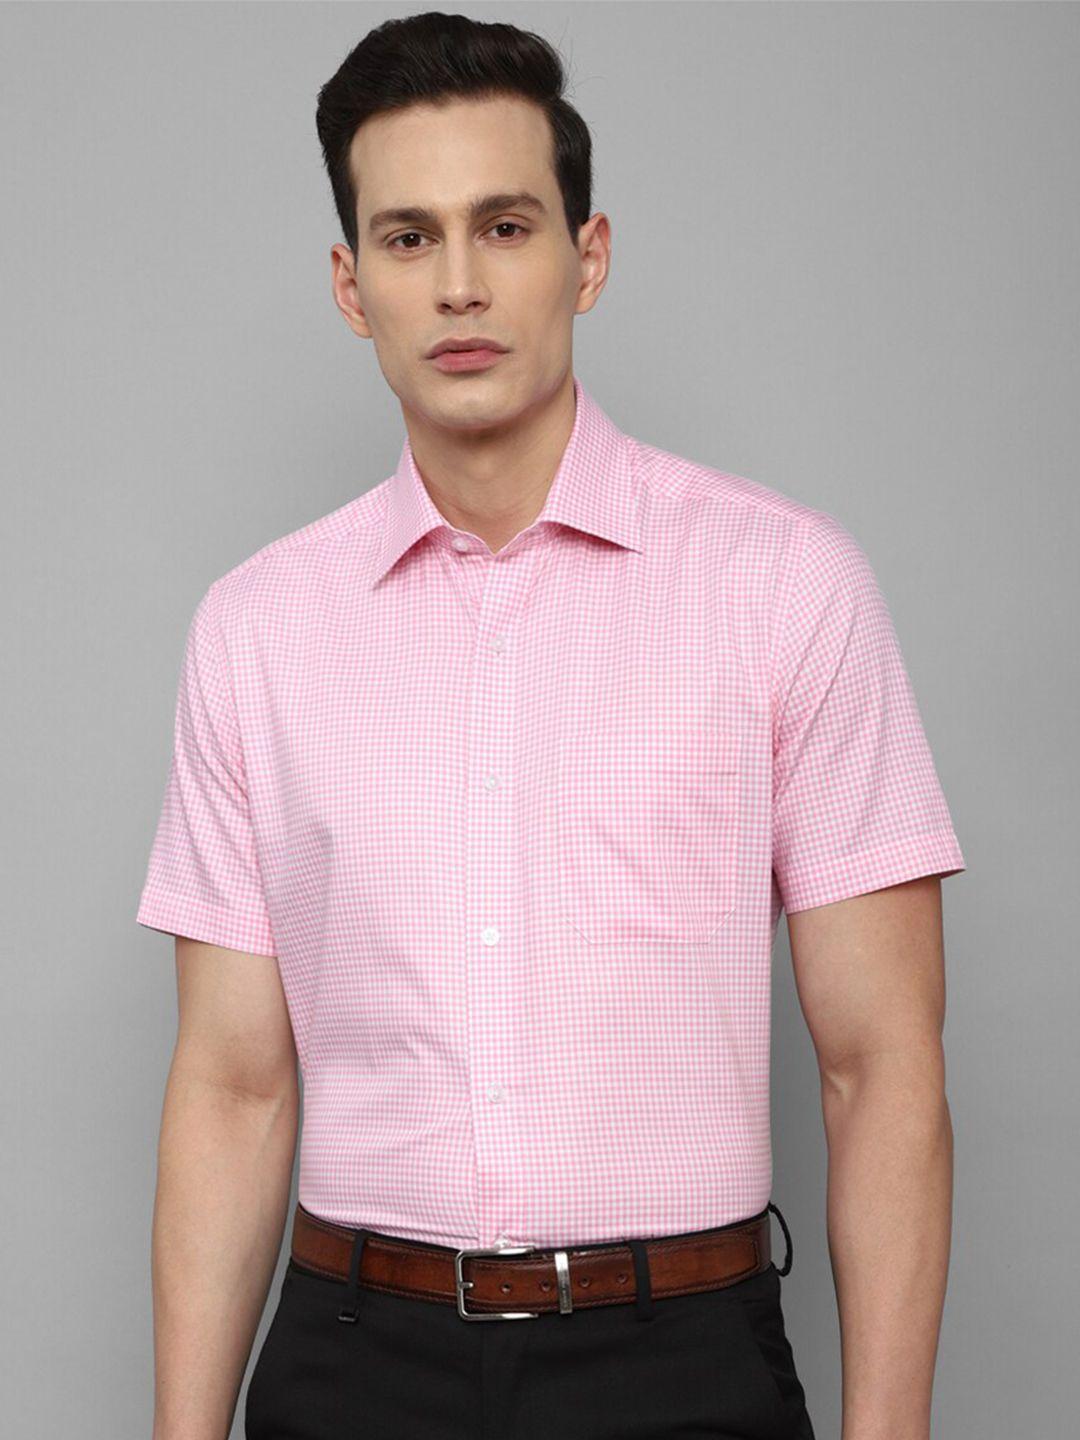 louis-philippe-men's-pink-formal-shirt